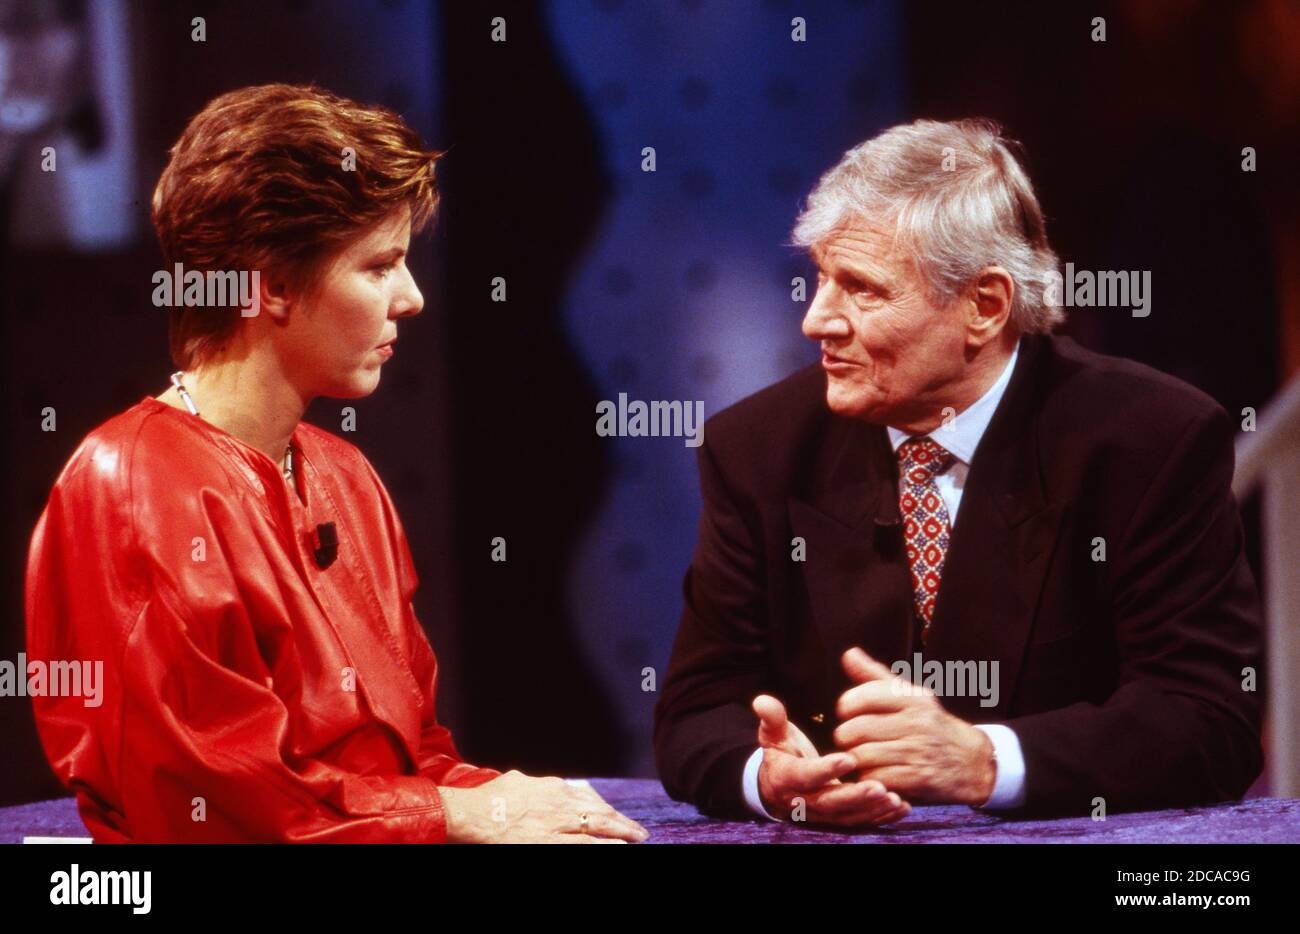 Parlazzo, Medienshow, Deutschland 1991 - 1998, Sendung vom 3. Februar 1995, Moderatorin Bettina Böttinger in roter Lederjacke mit Ialkgast Stock Photo